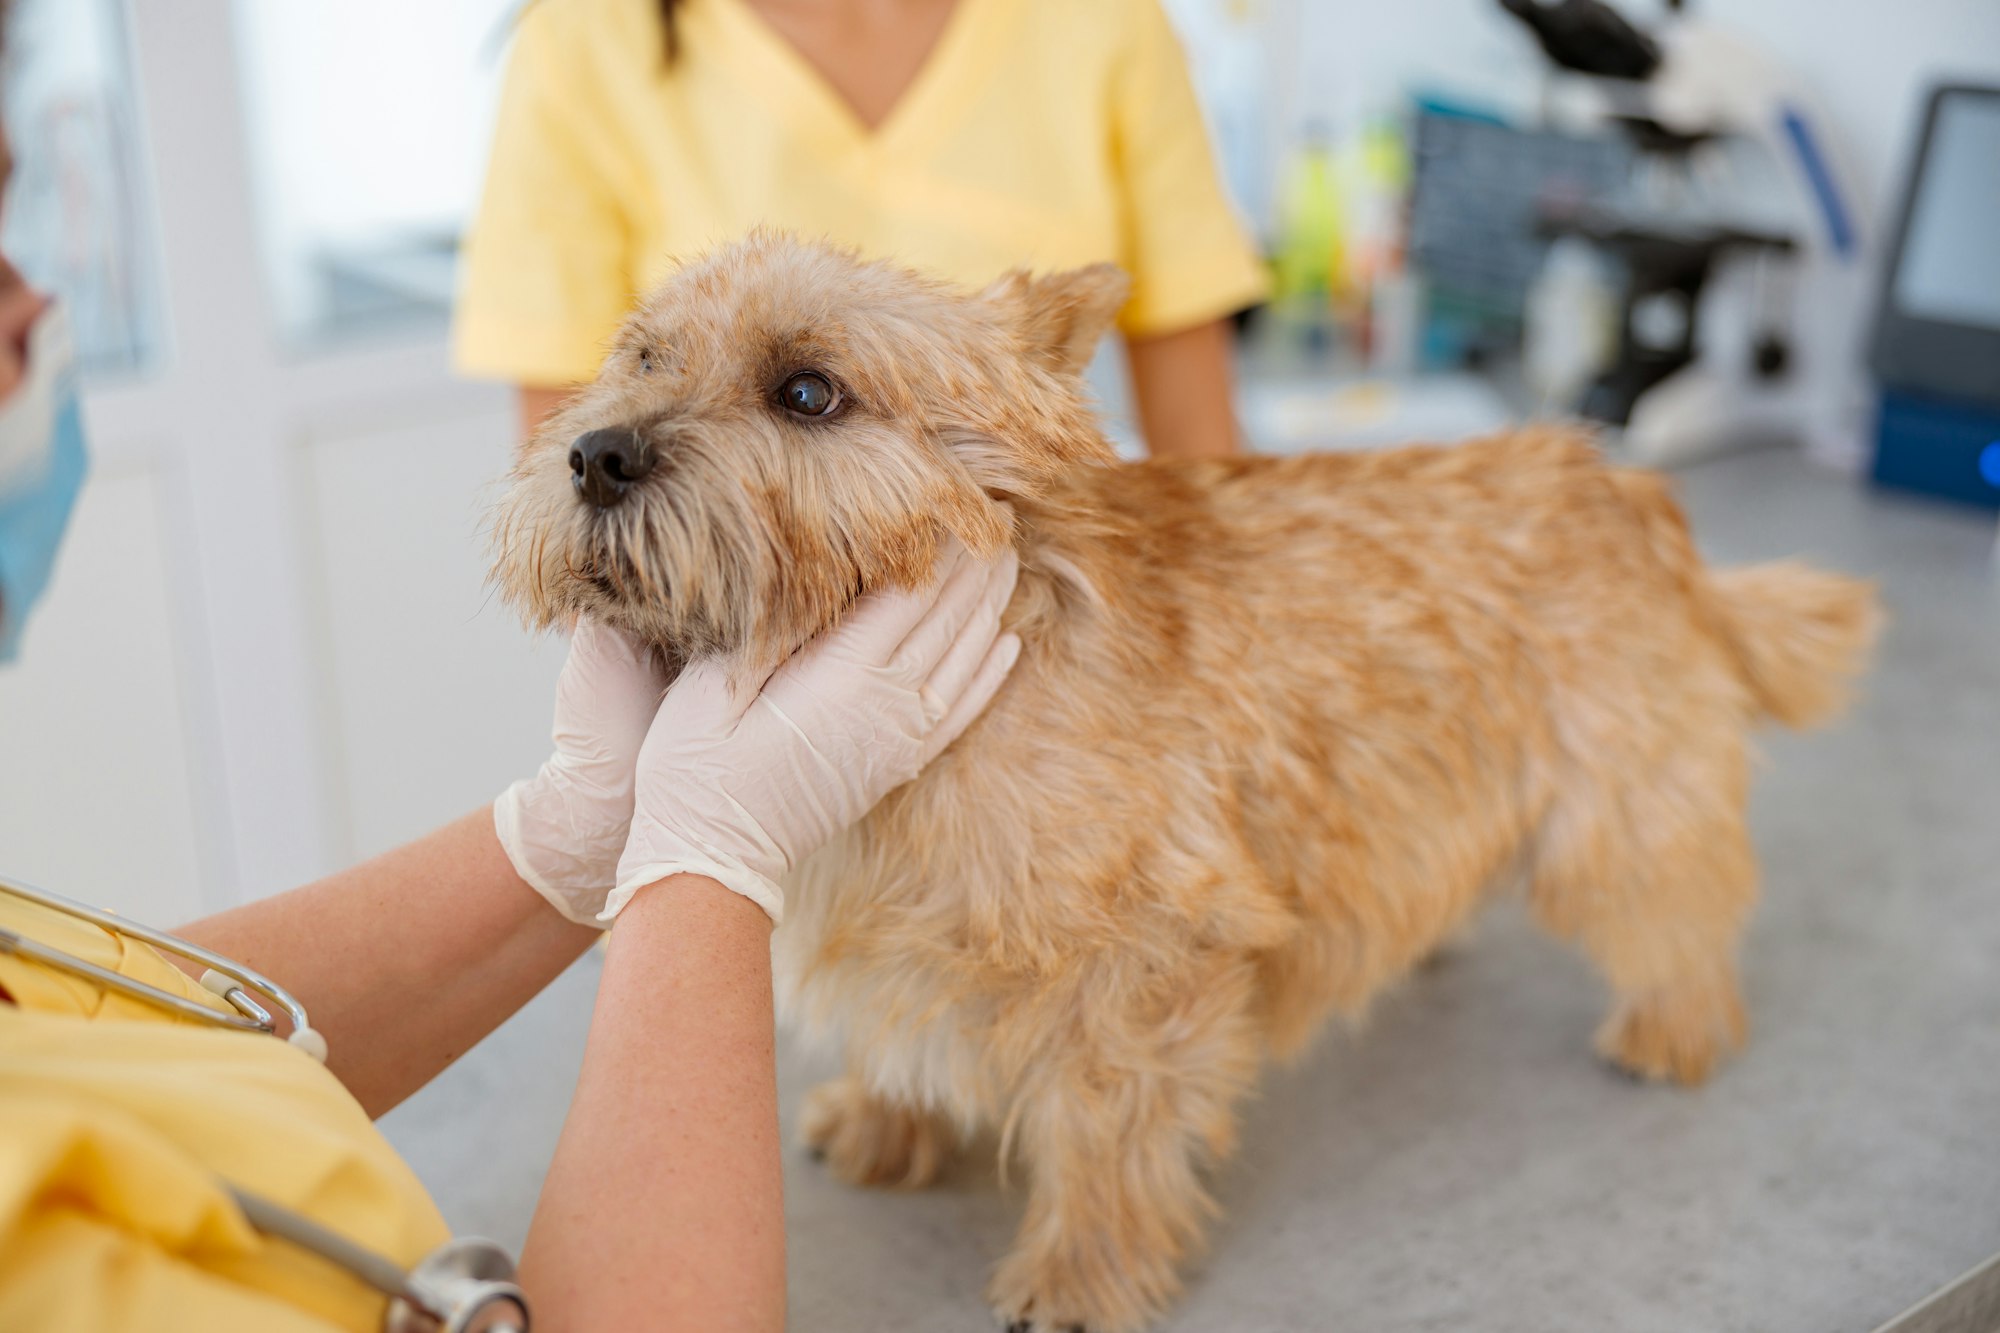 Vet examining pet dog on table in vet clinic